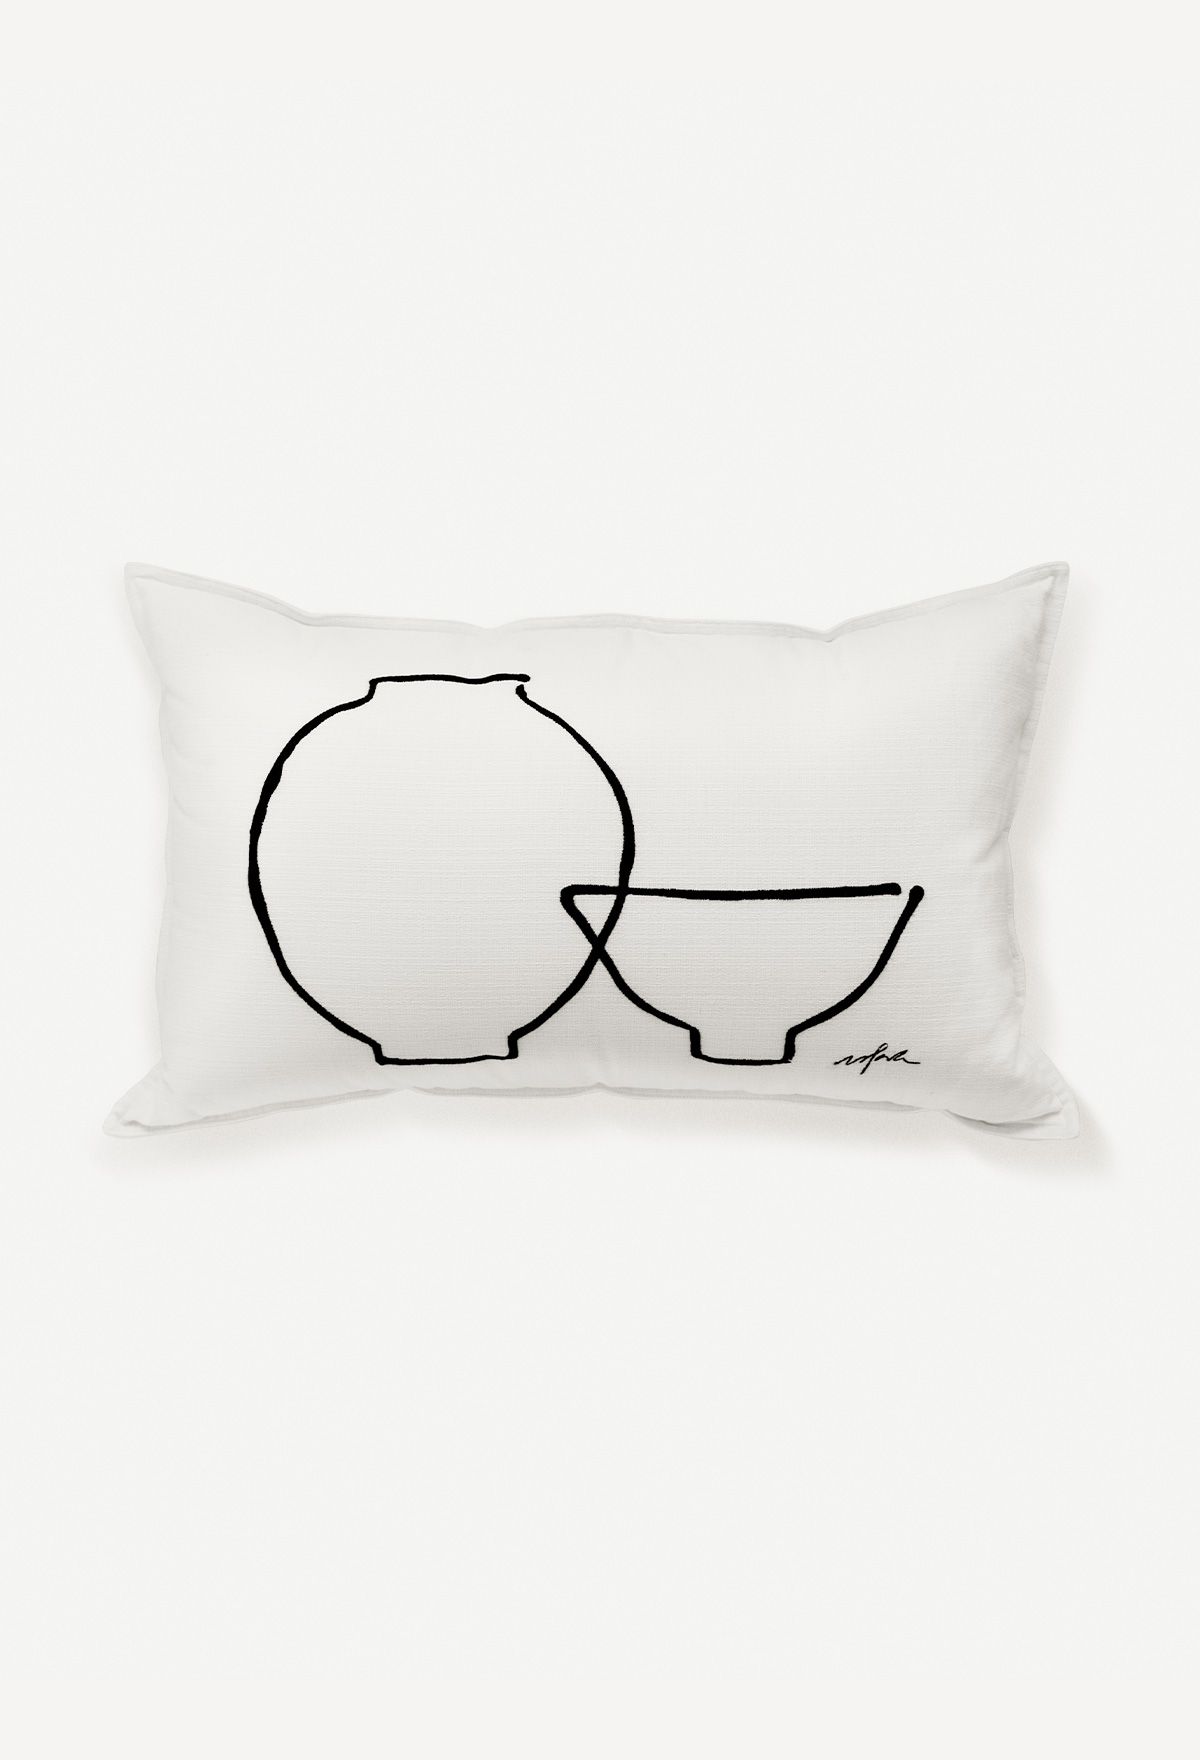 Small white moon jar and mortar line drawing cushion (65*40)